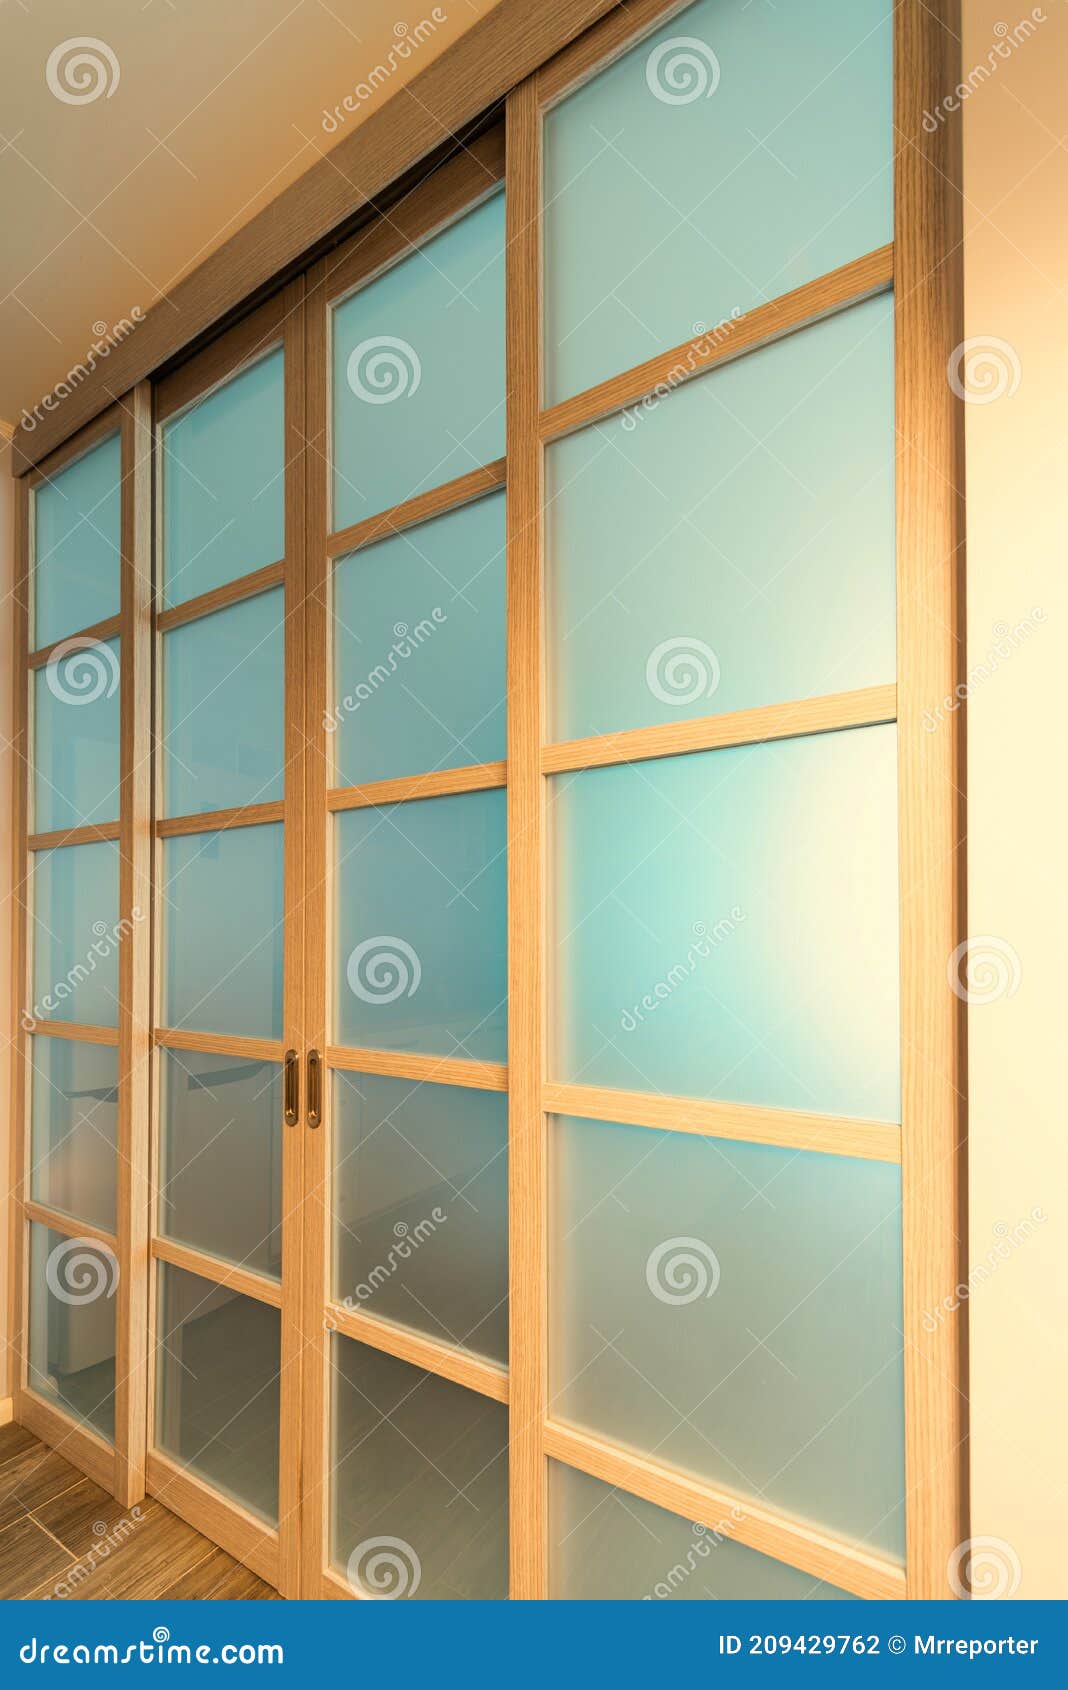 sliding glassed doors sunny day